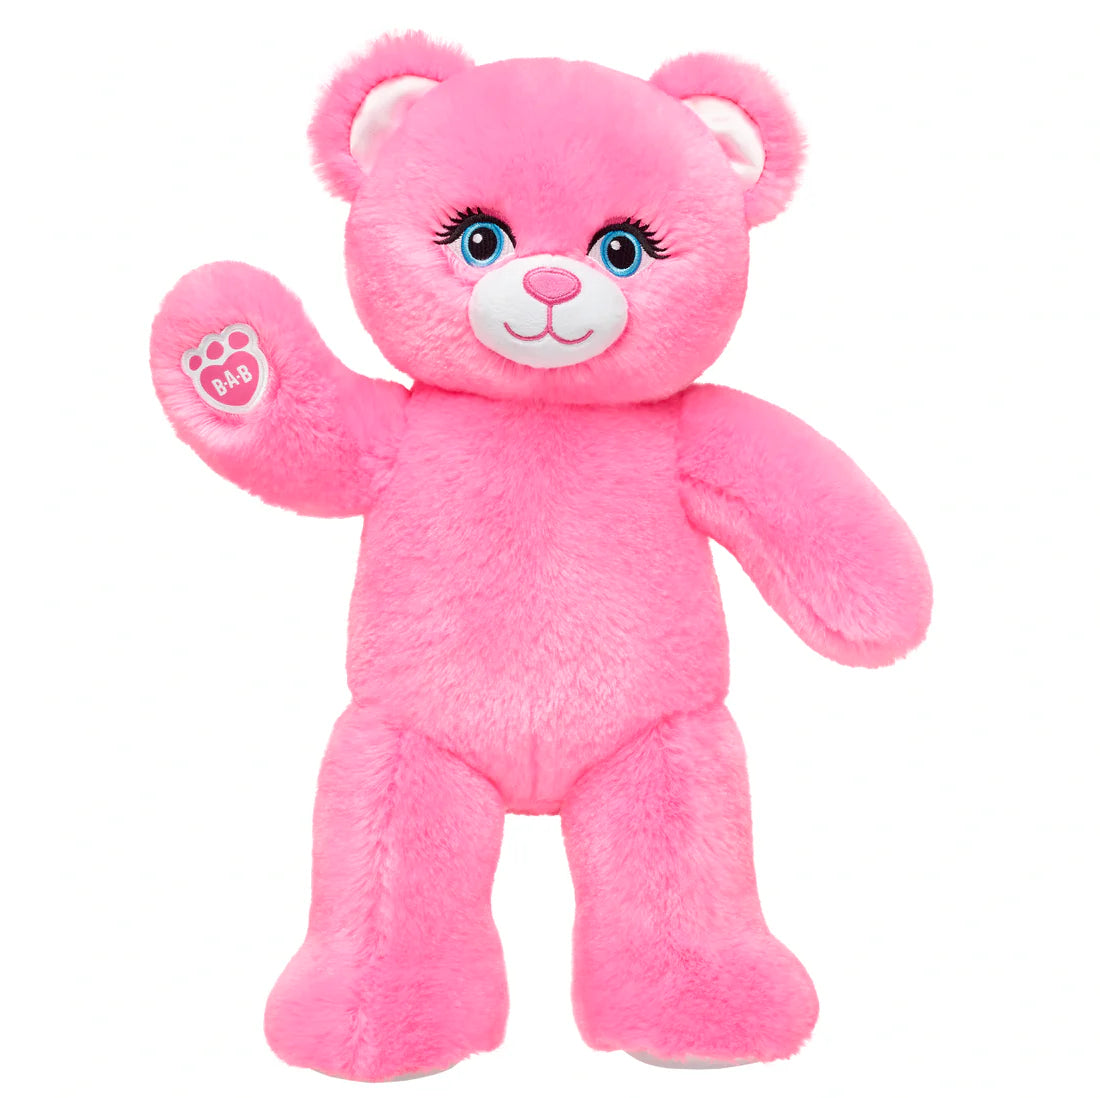 Barbie™ Pink Bear